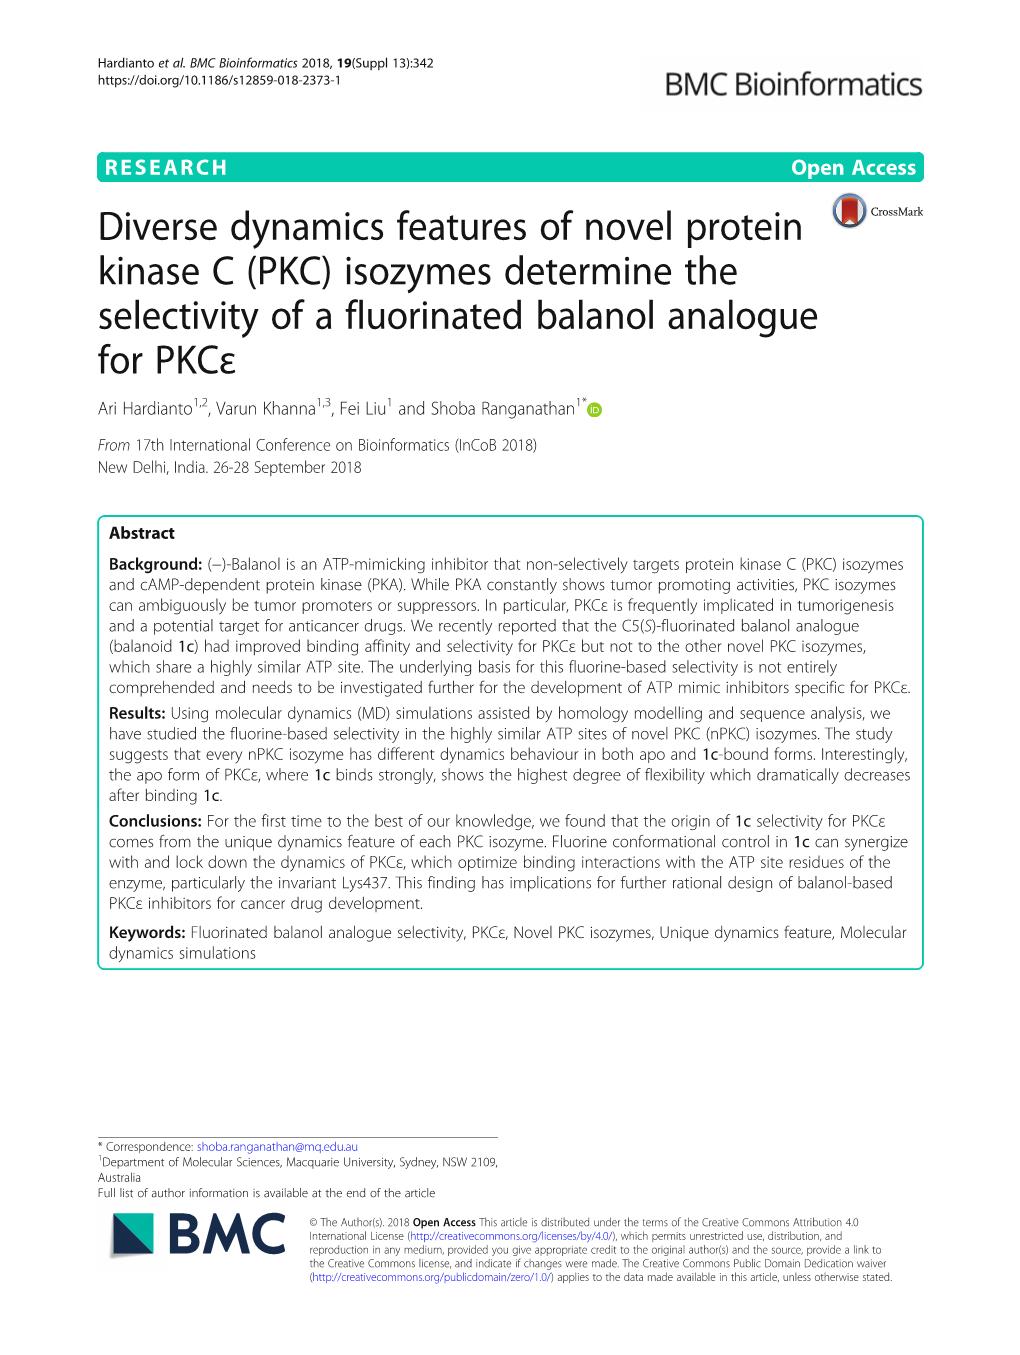 Diverse Dynamics Features of Novel Protein Kinase C (PKC